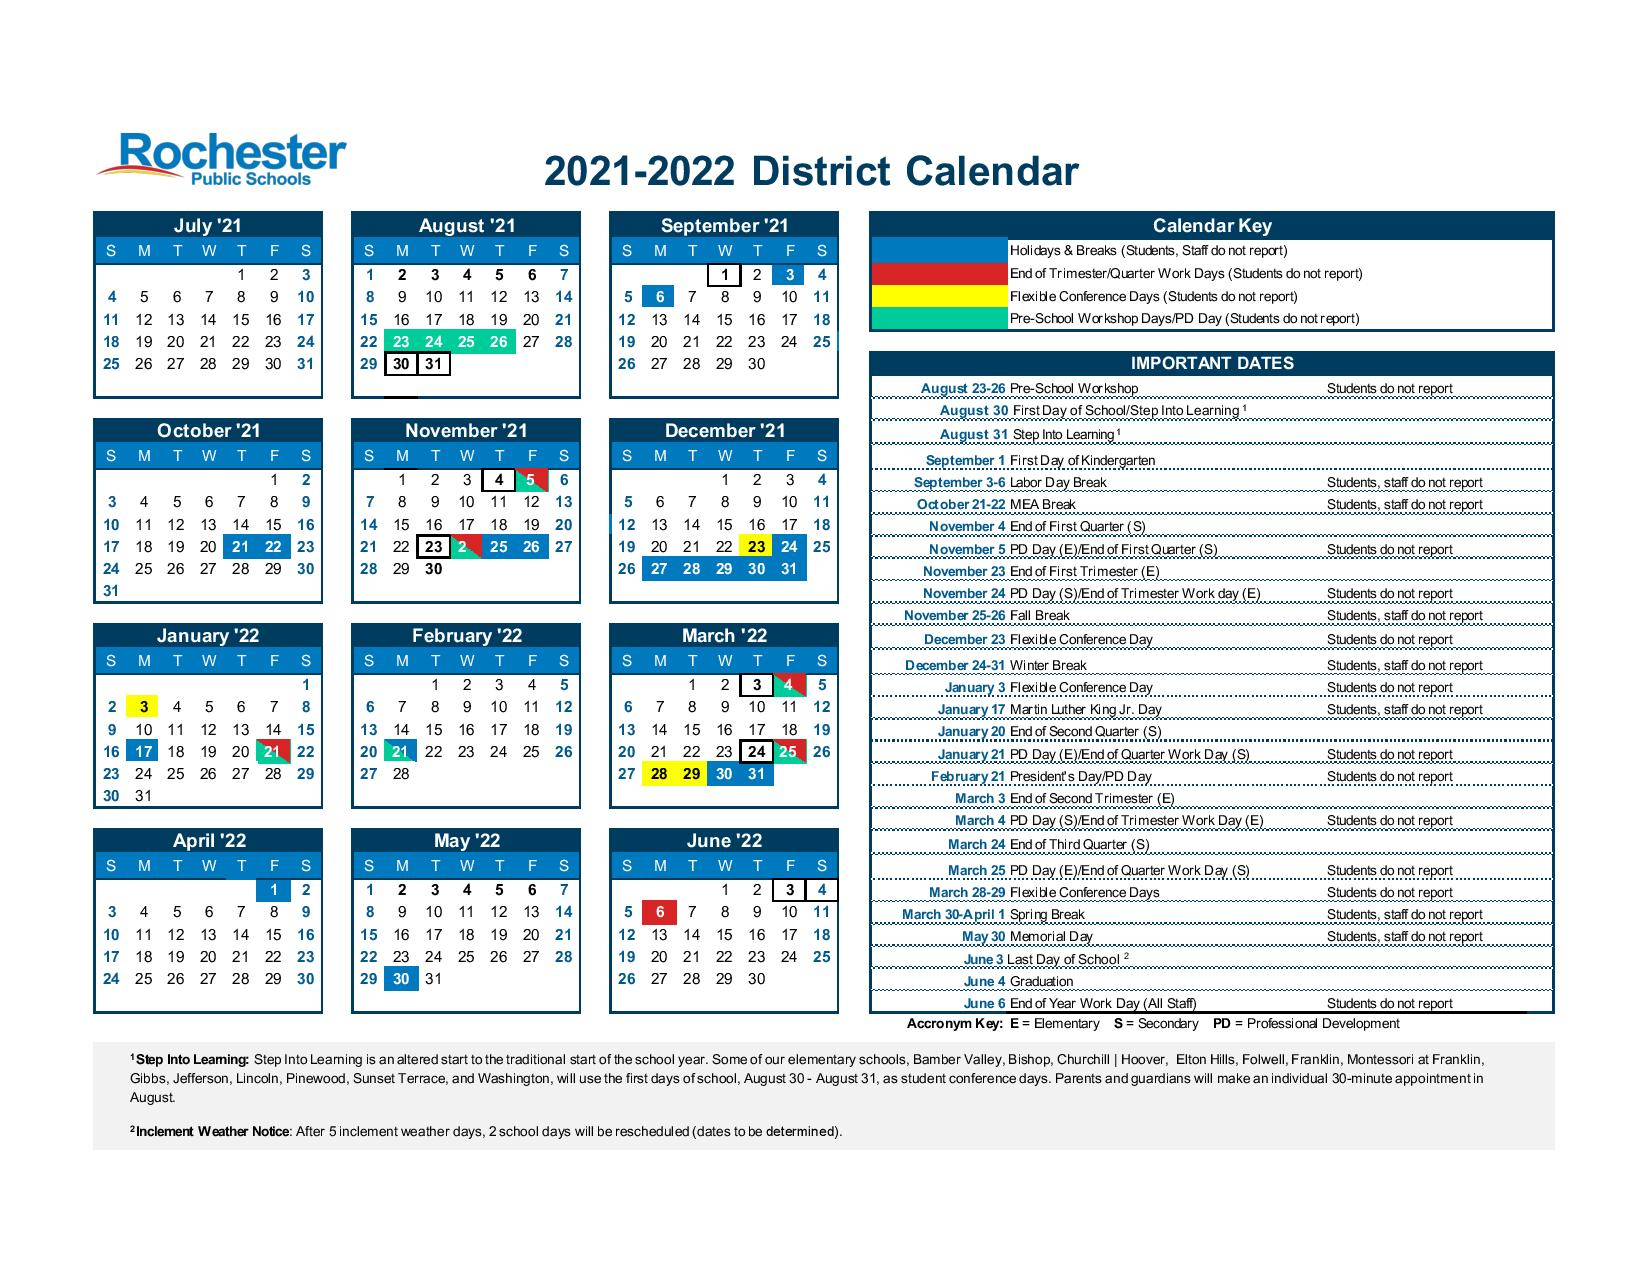 Rochester Public Schools Calendar 2021-2022 In Pdf